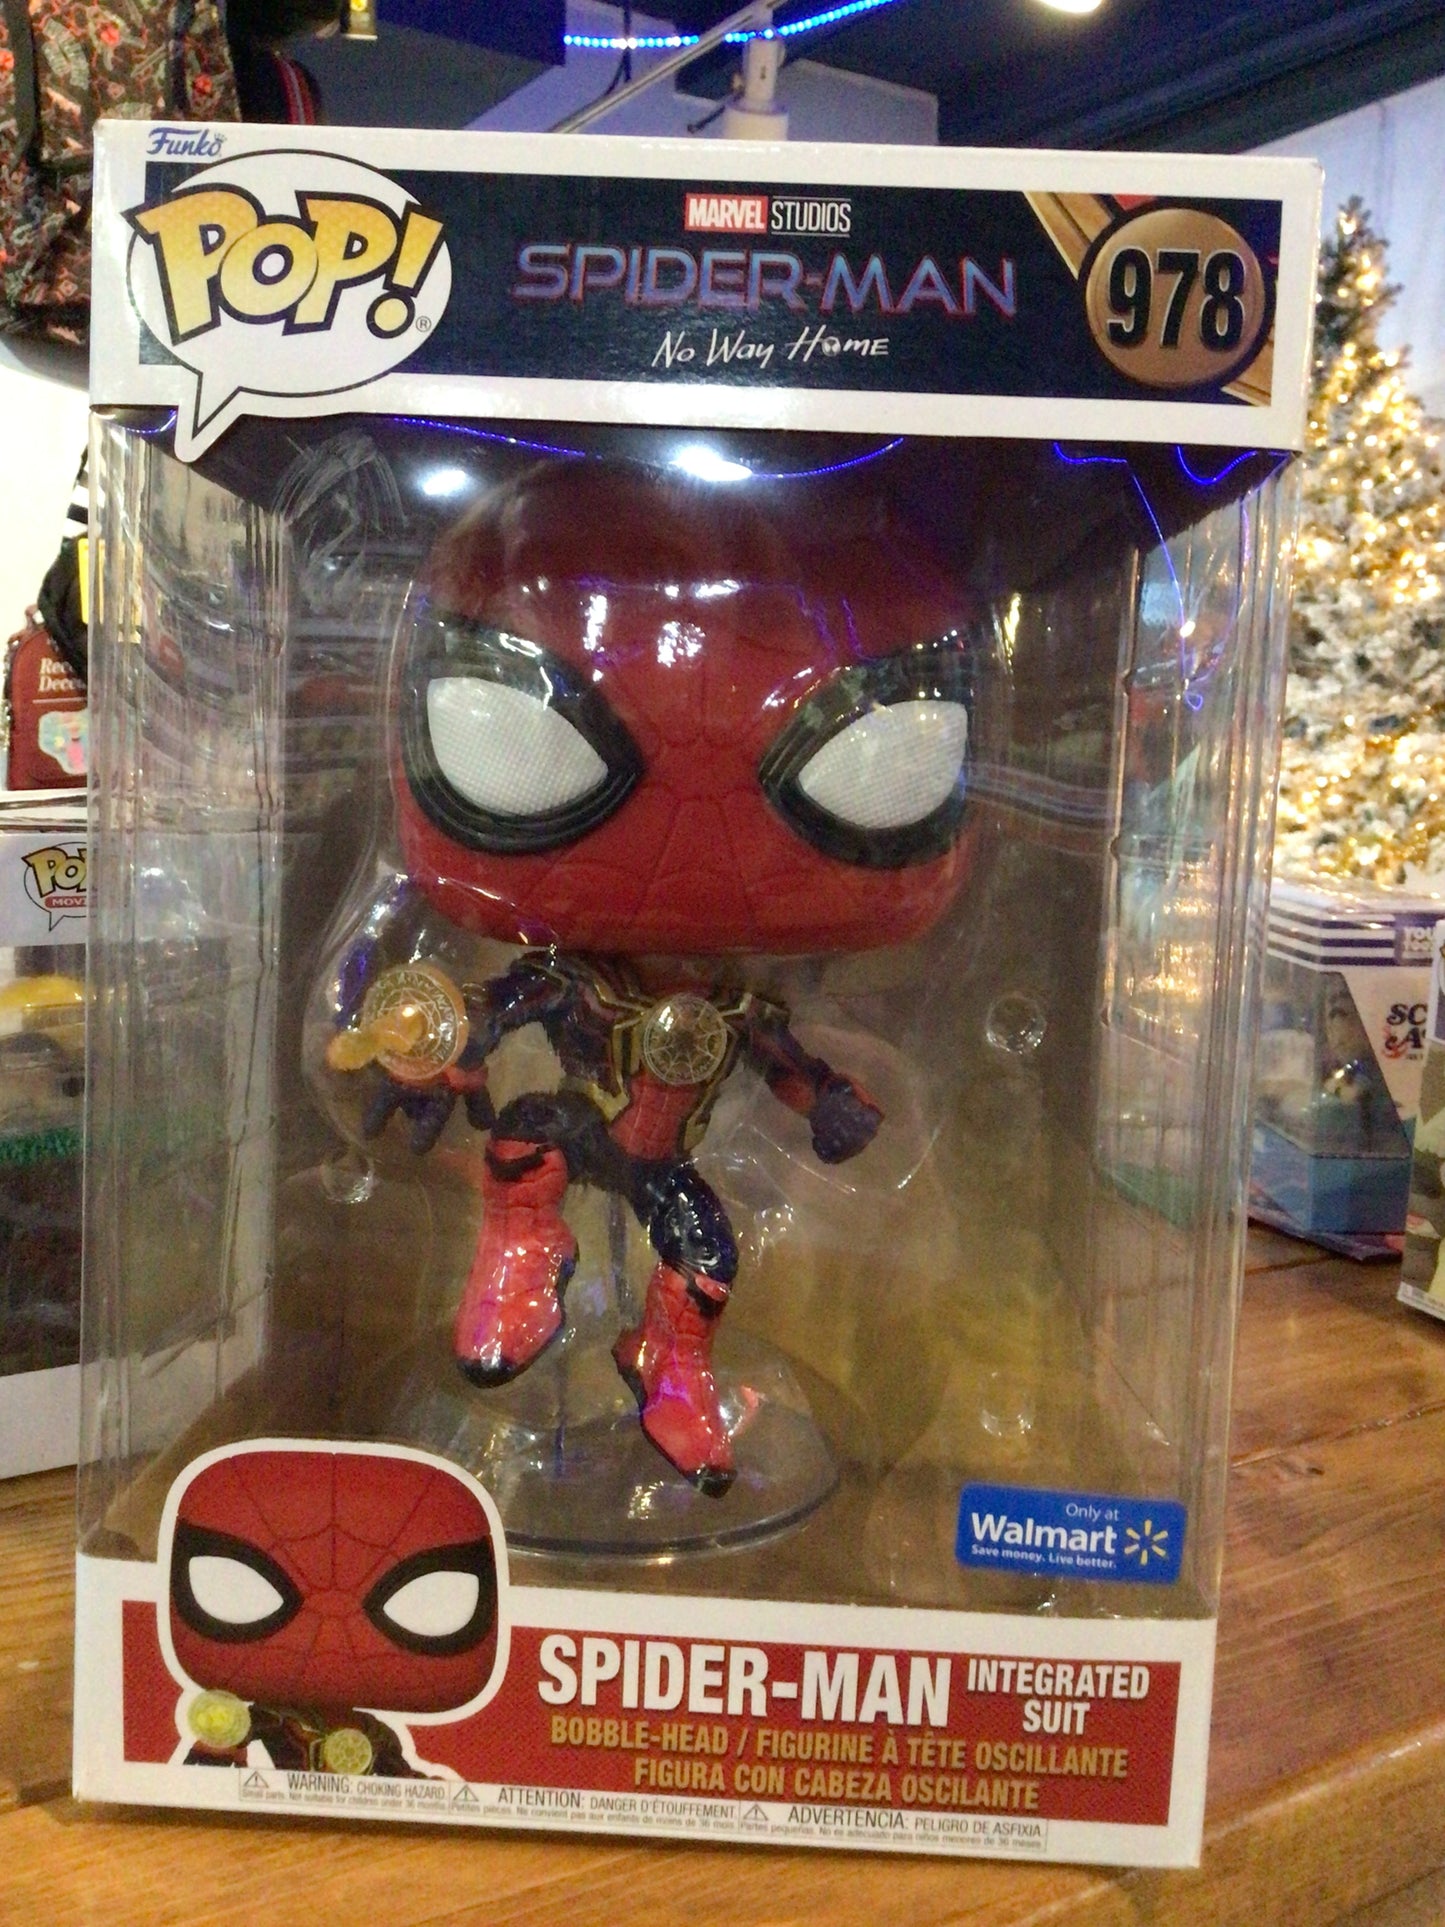 Marvel Spider-man: NWH - Spider-man Integrated Suit #978 10 inch - Funko Pop! Vinyl Figure